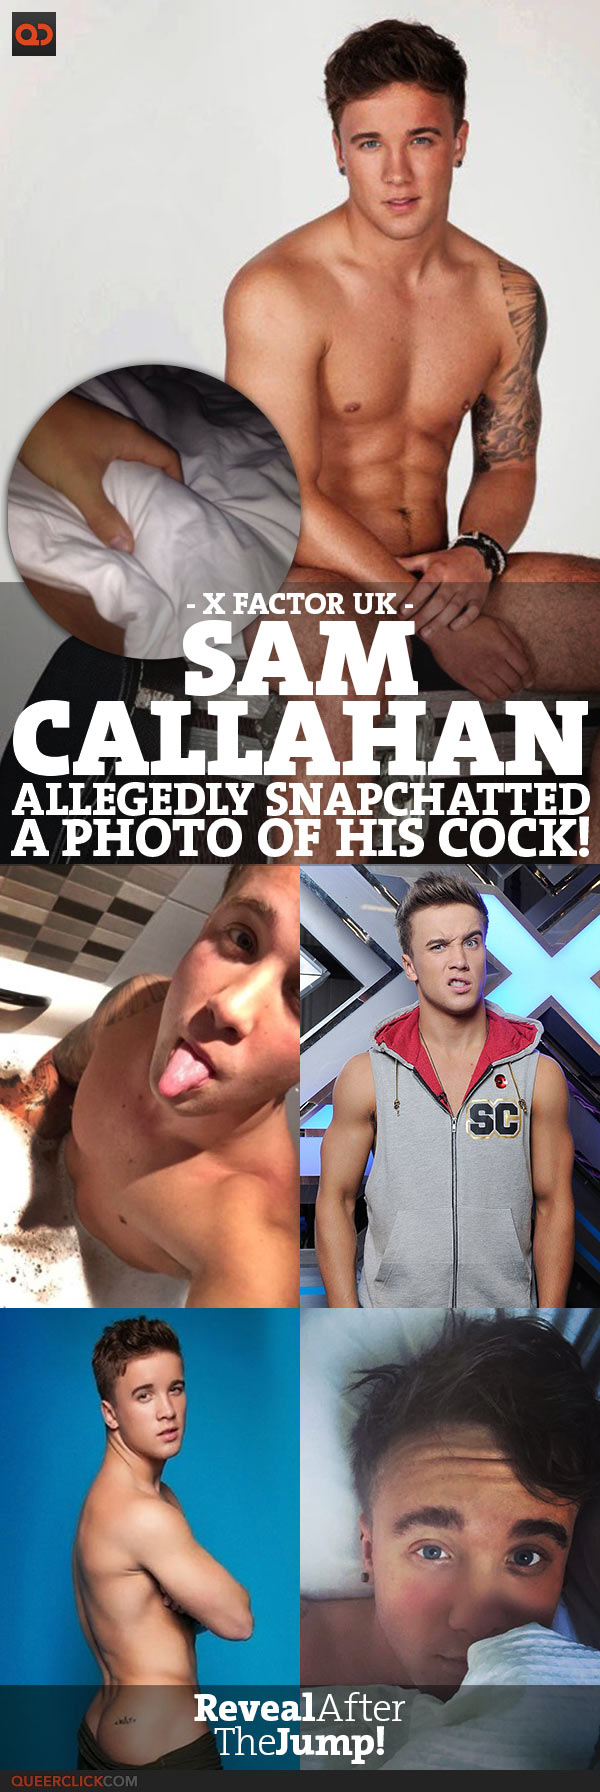 qc-exposed_celeb_sam_callahan_xfactor_alleged_snapchat_cock_photo-teaser